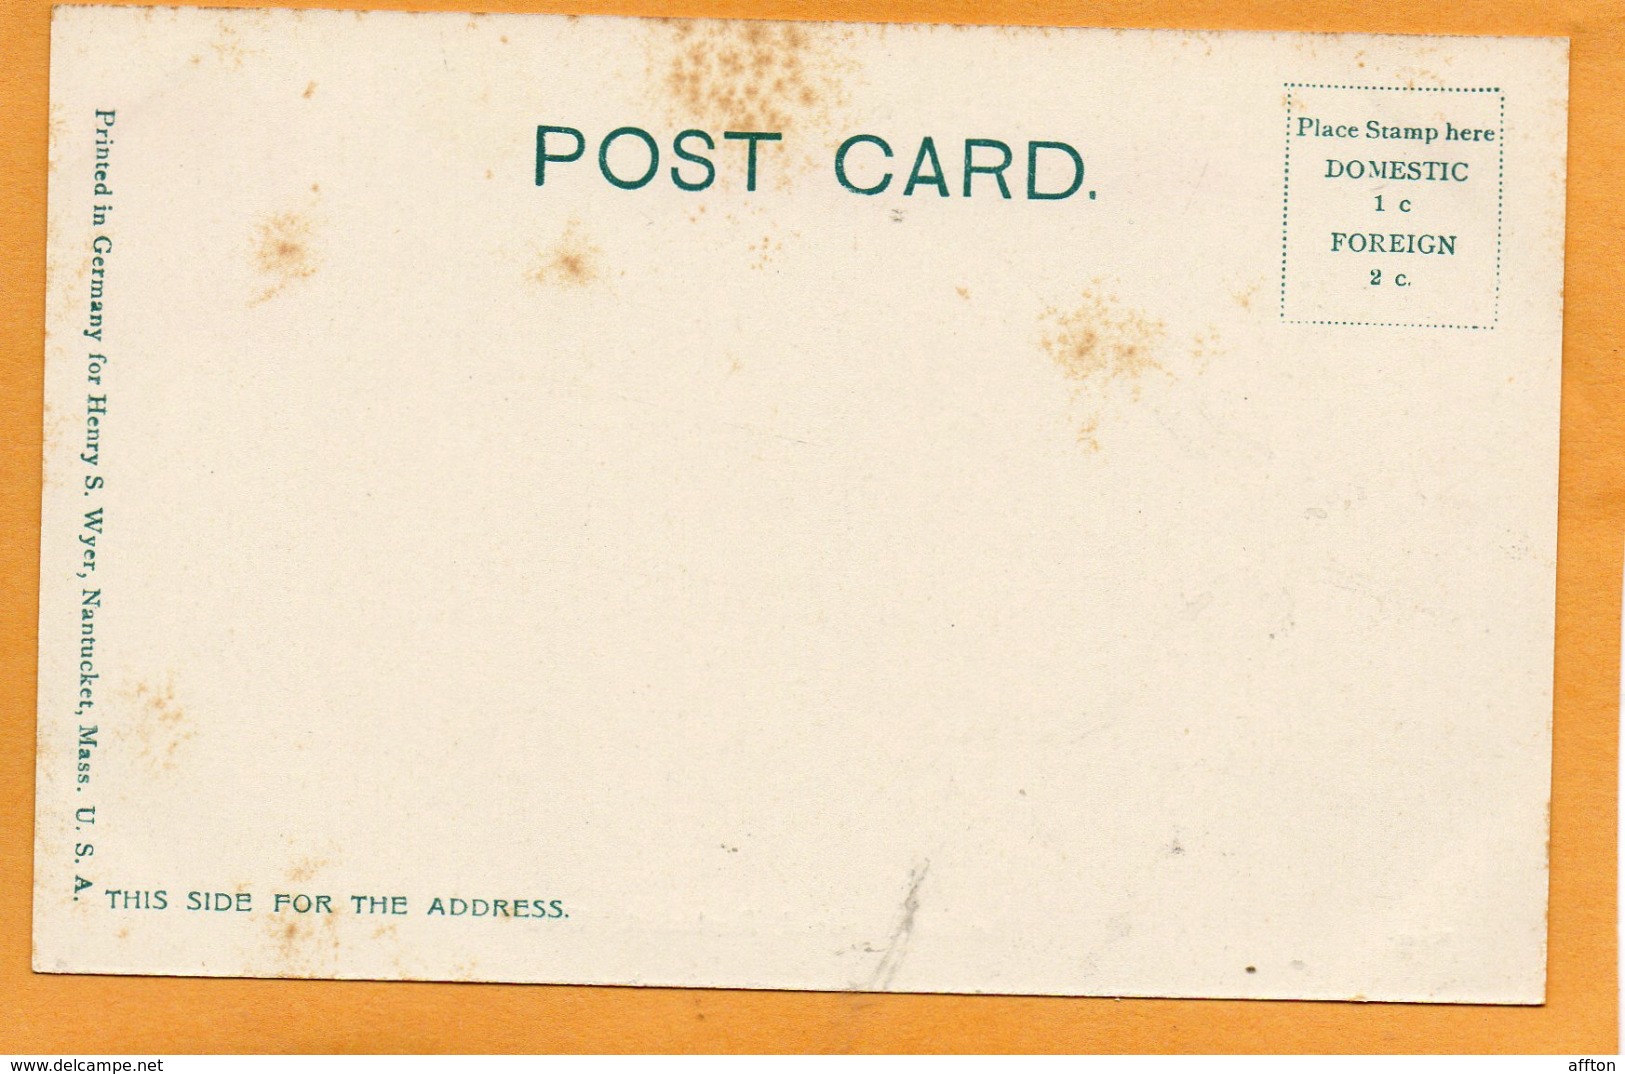 Nantucket MA 1905 Postcard - Nantucket